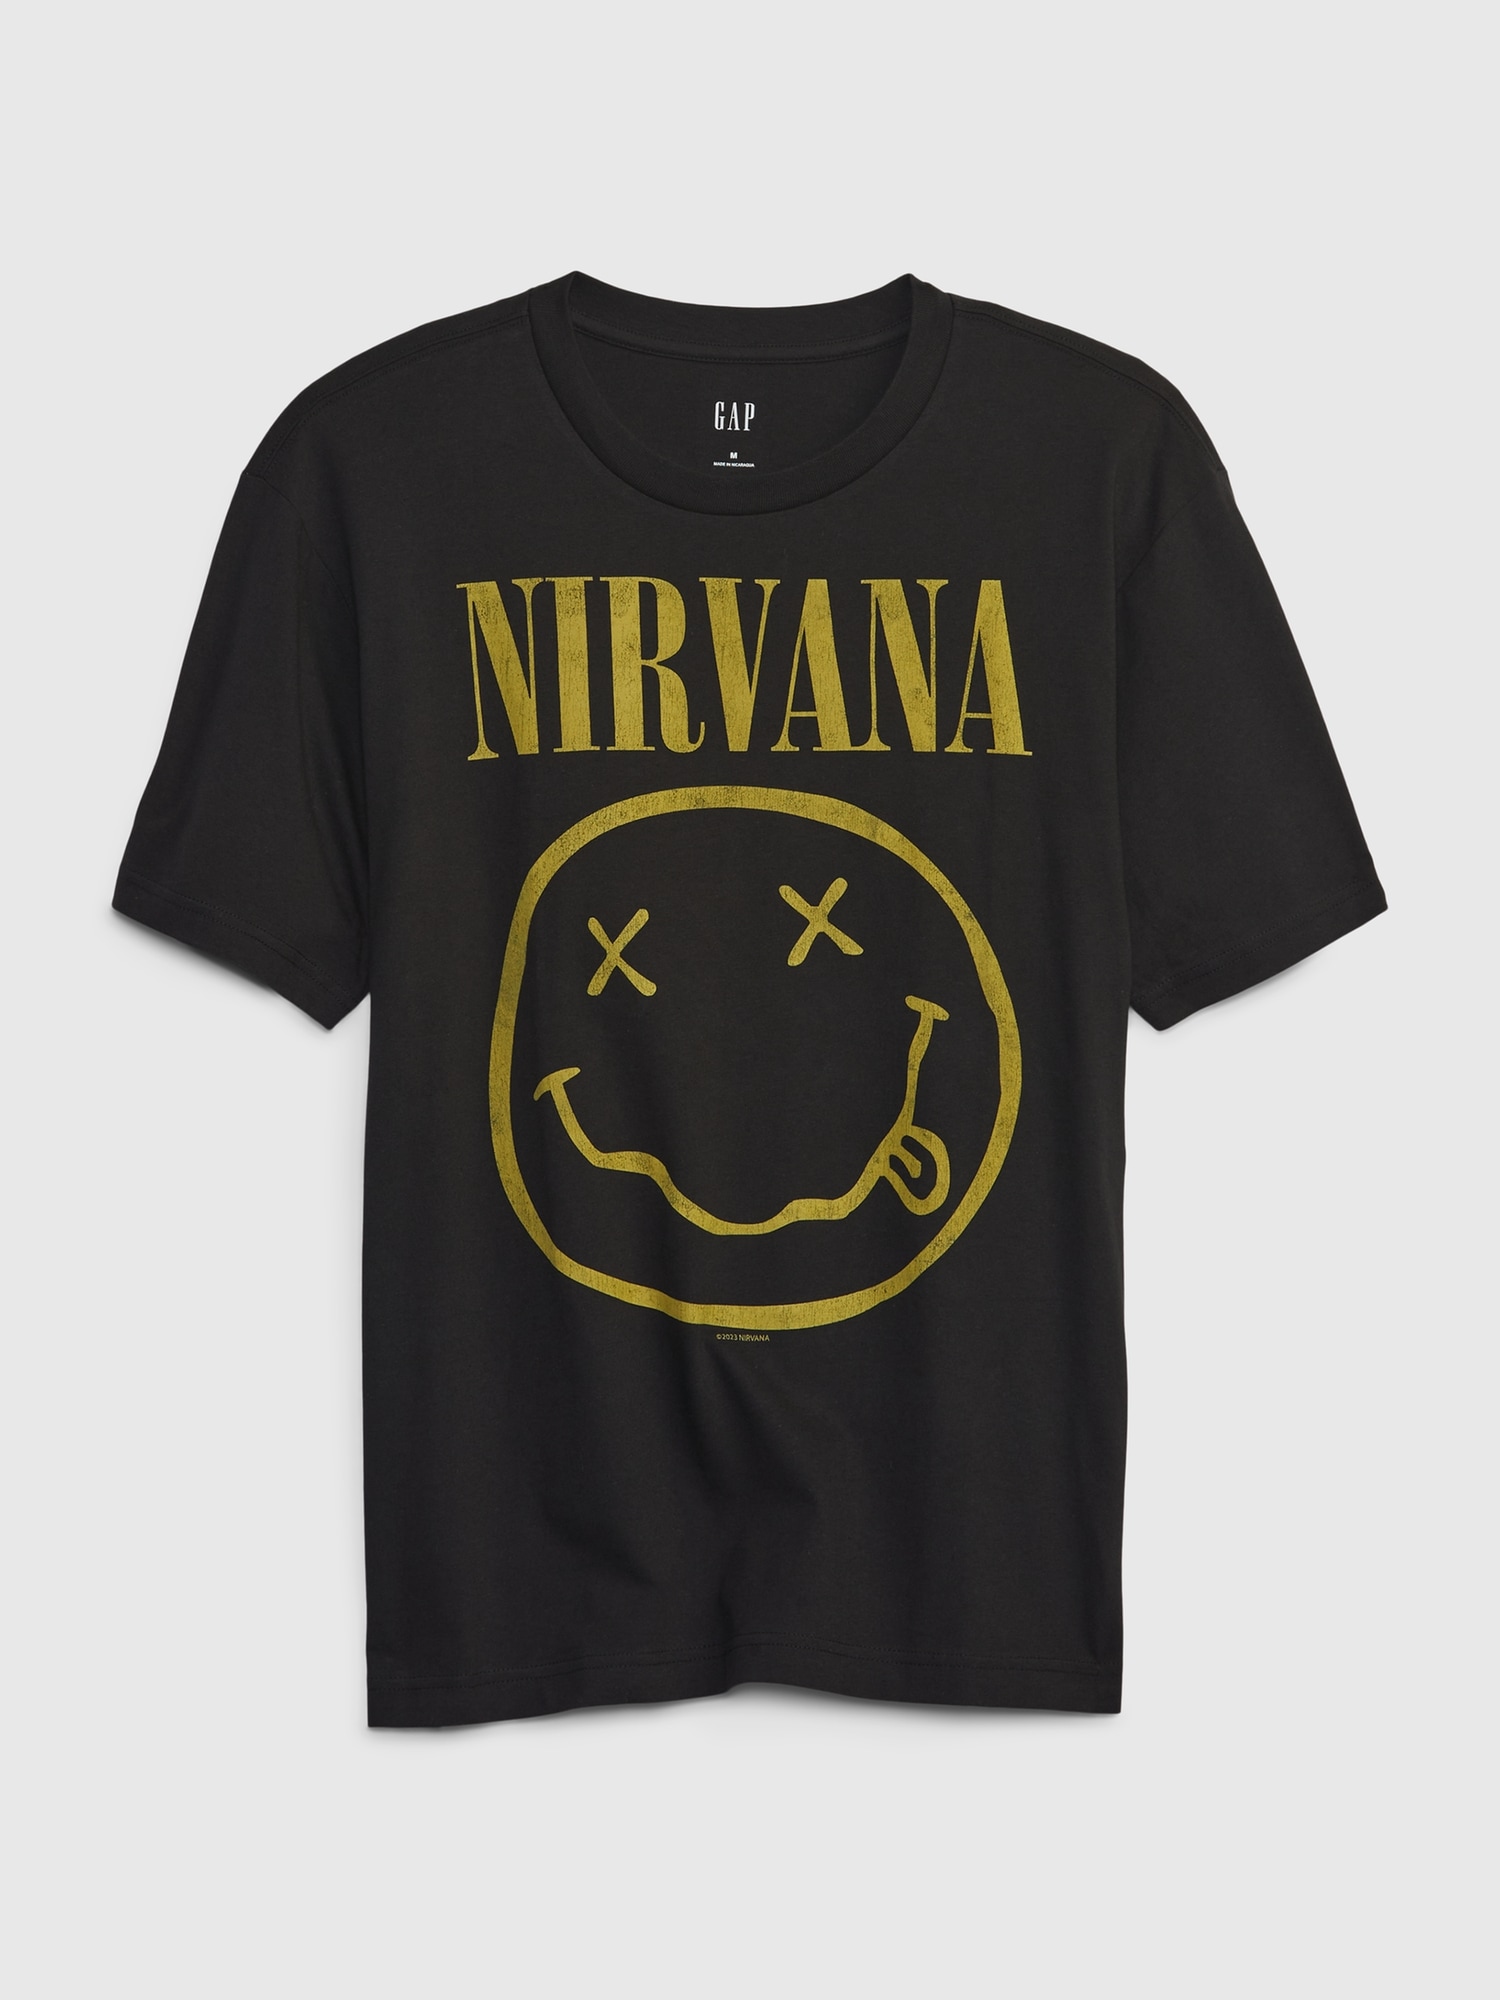 Gap Nirvana Graphic T-Shirt black. 1